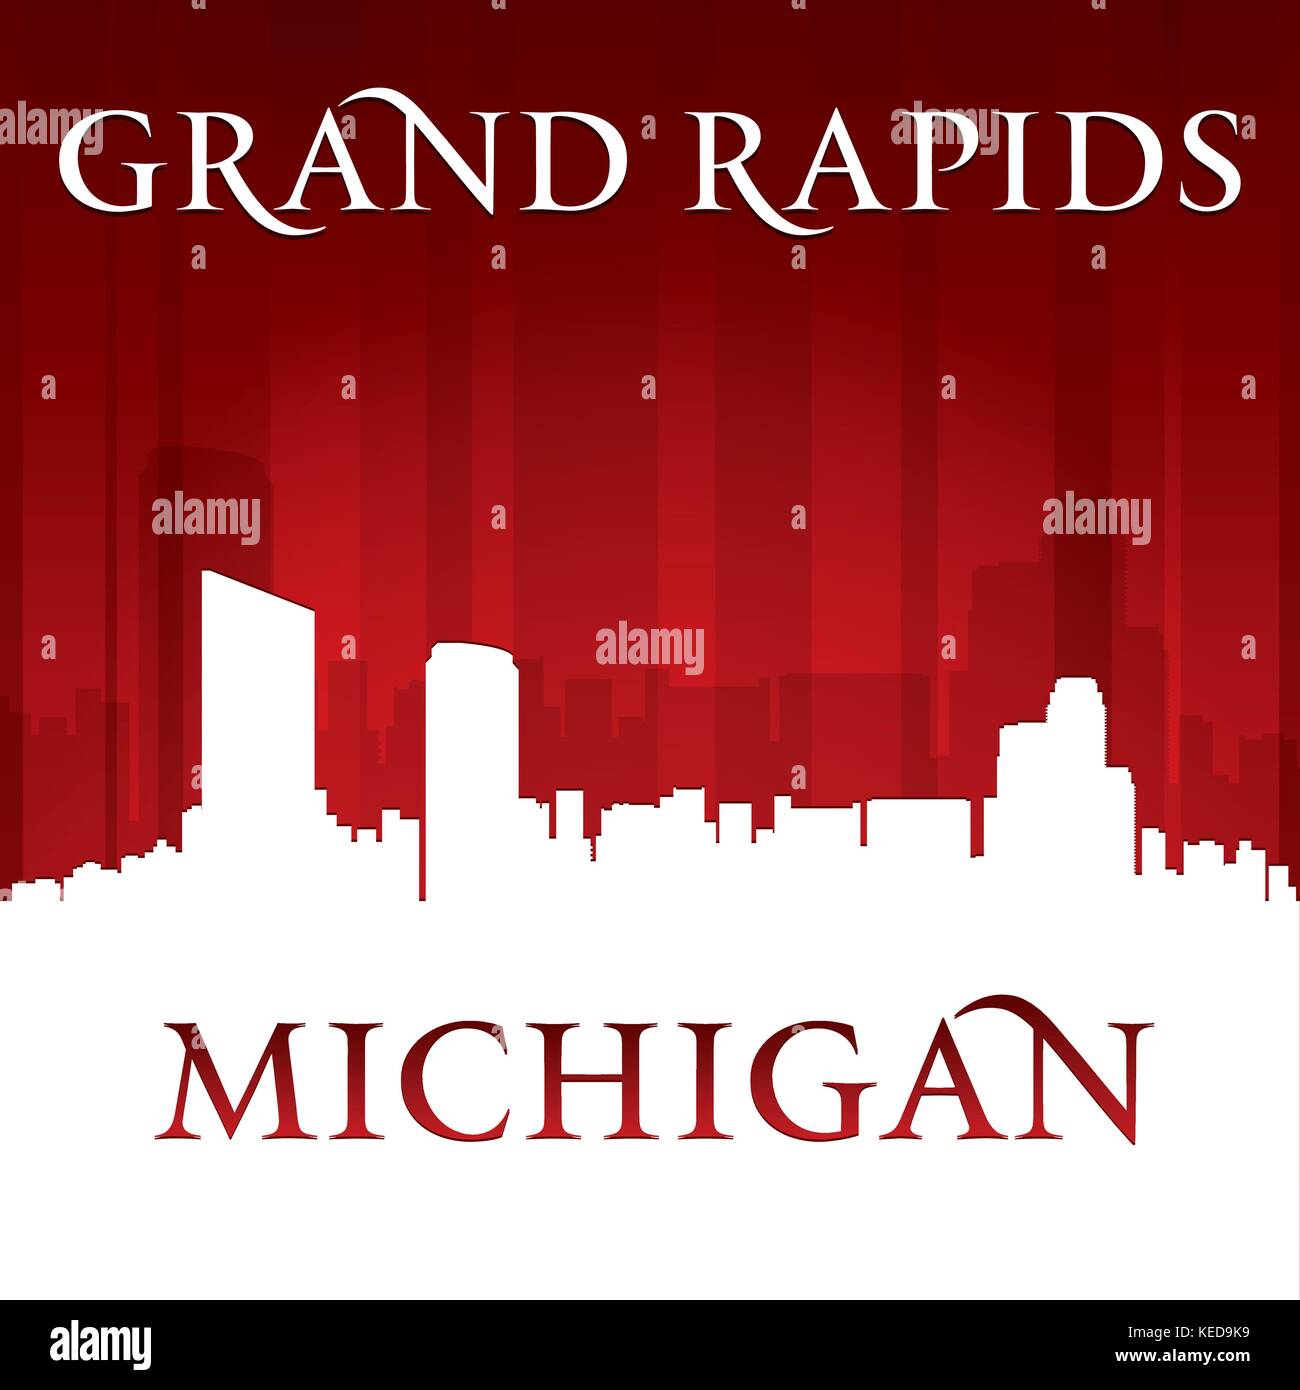 Grand Rapids Michigan city skyline silhouette. Vector illustration Illustration de Vecteur